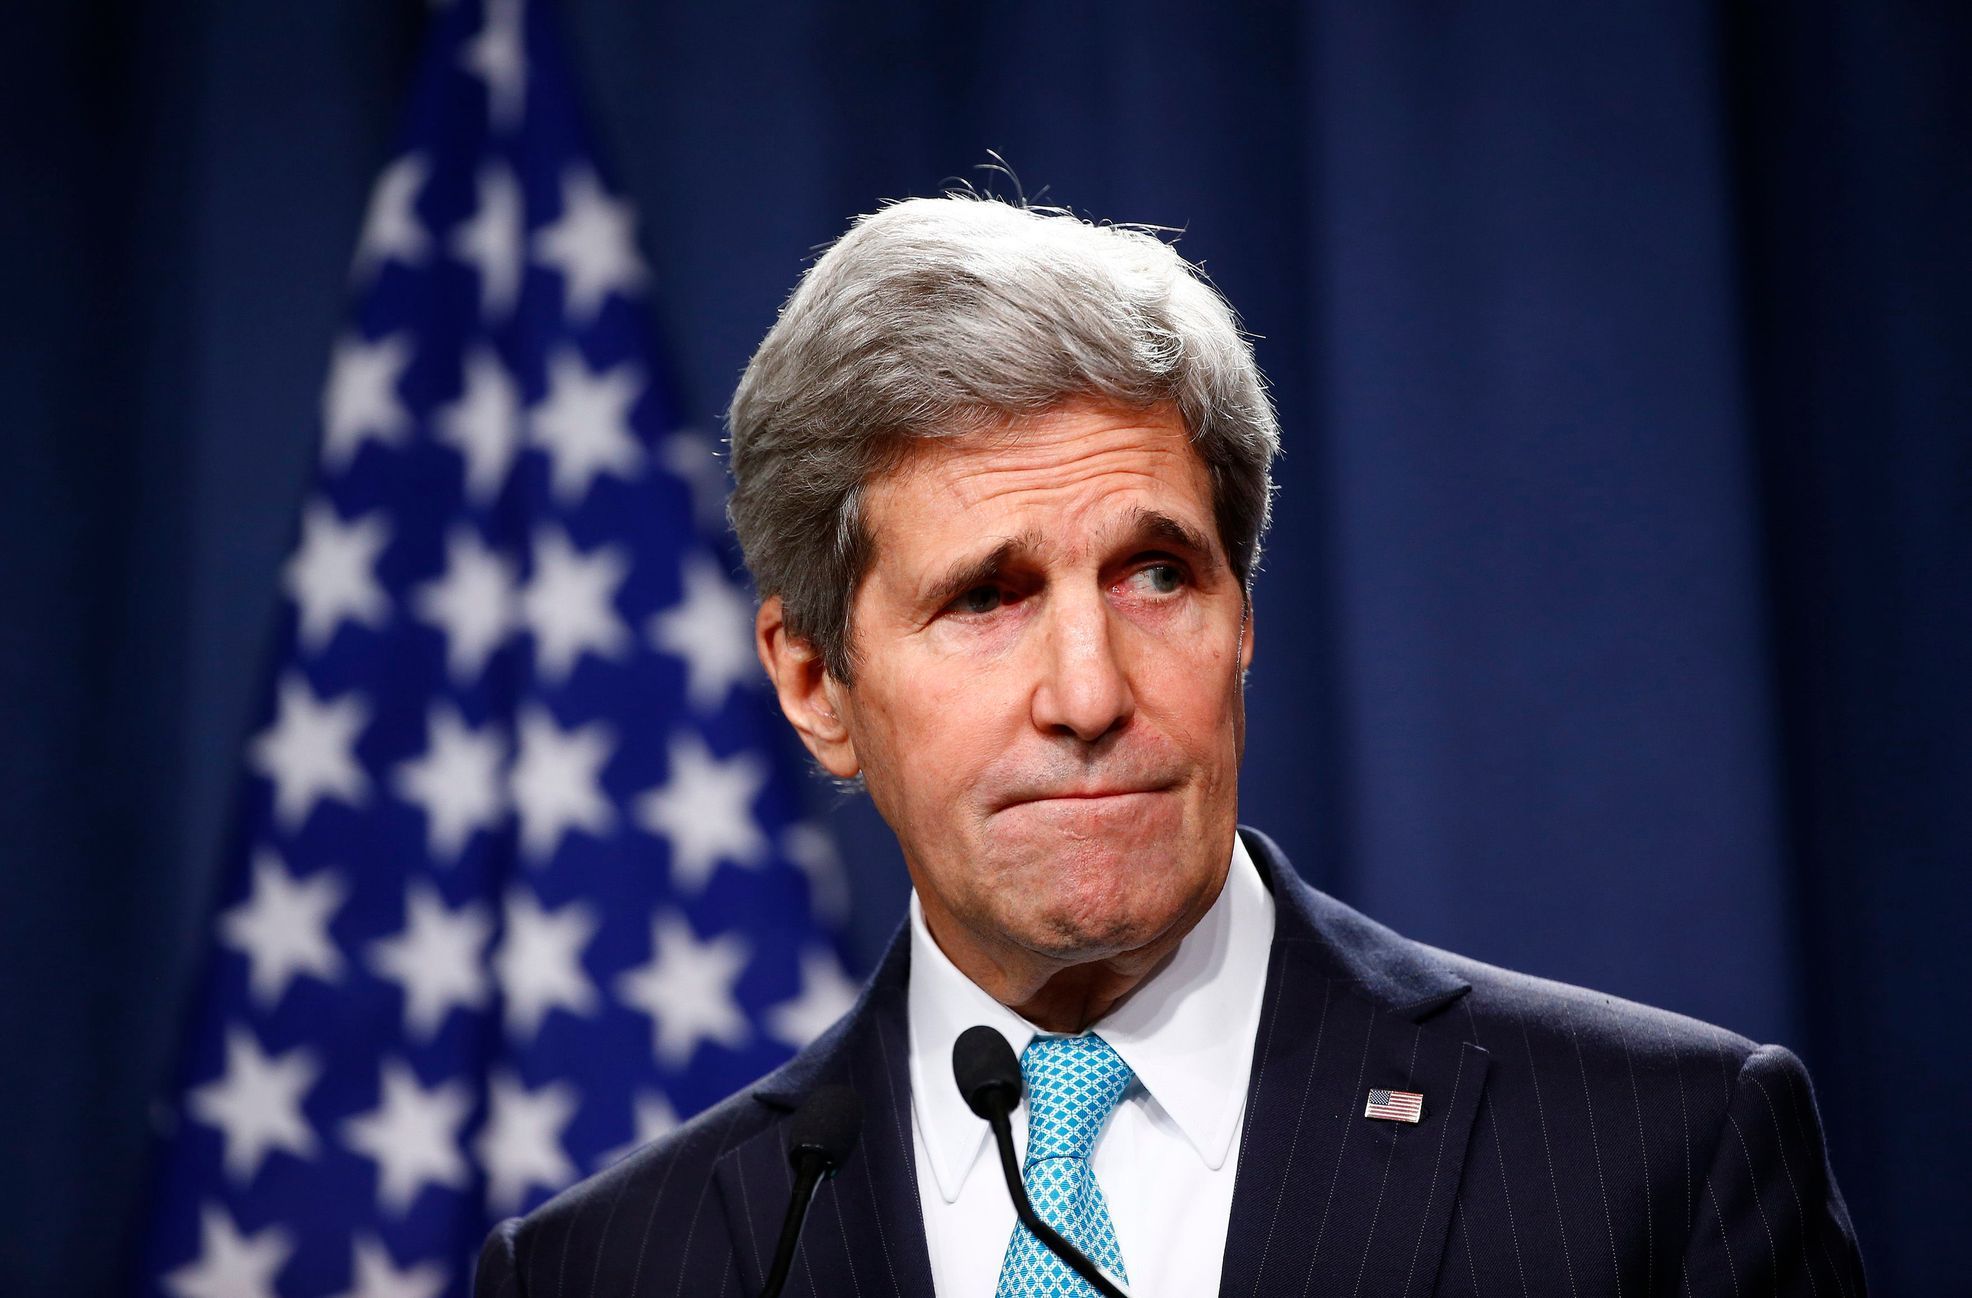 John Kerry attends media after talks on situation in Ukraine in Geneva